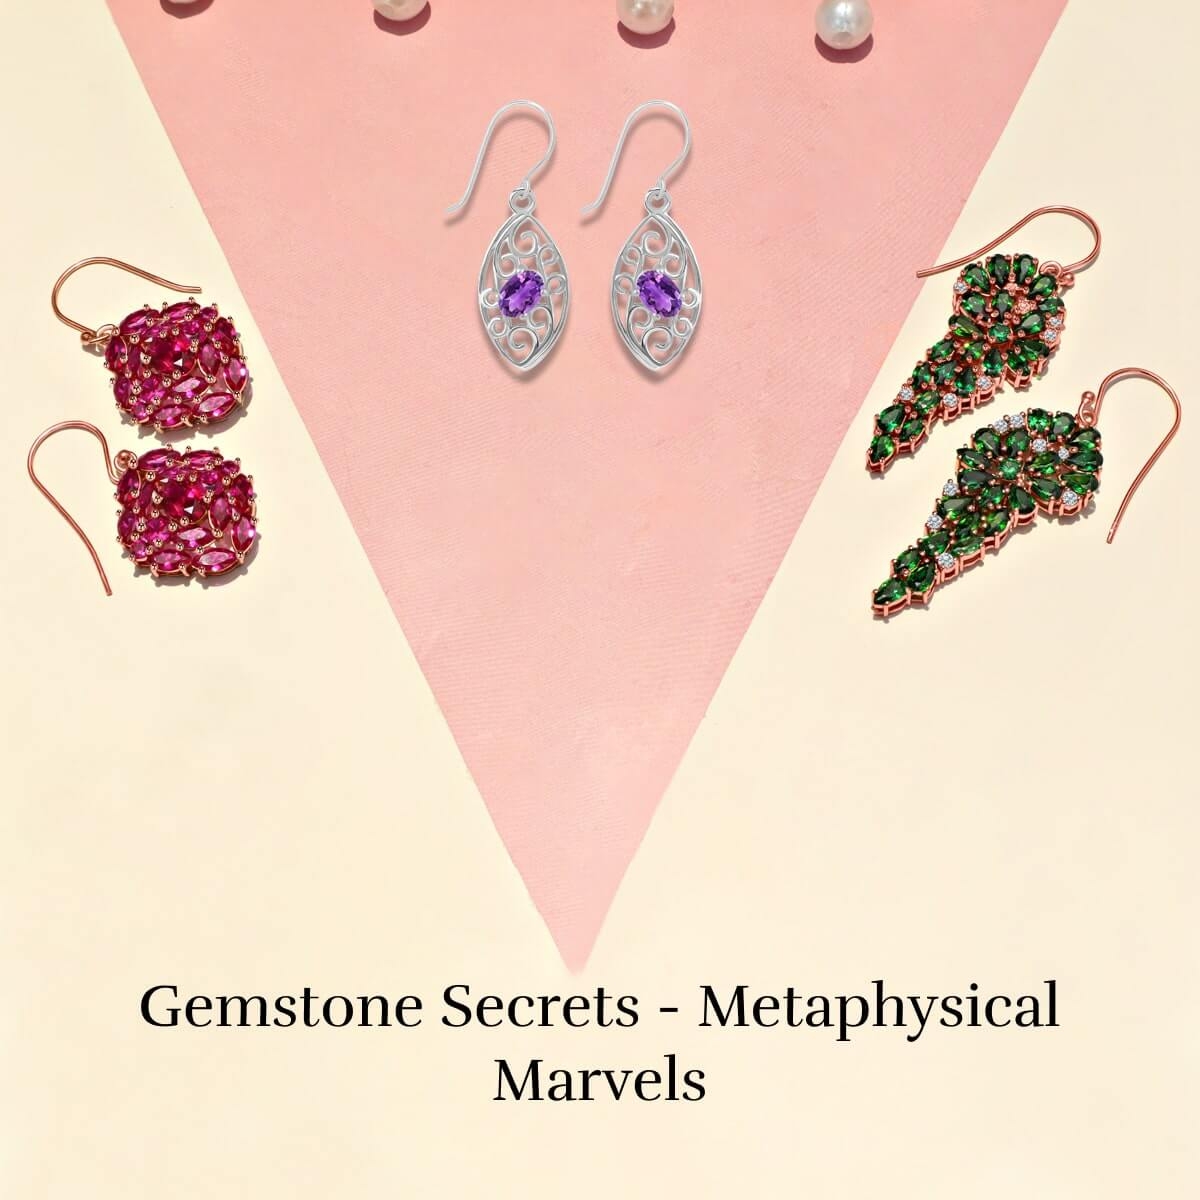 Metaphysical properties of gemstone